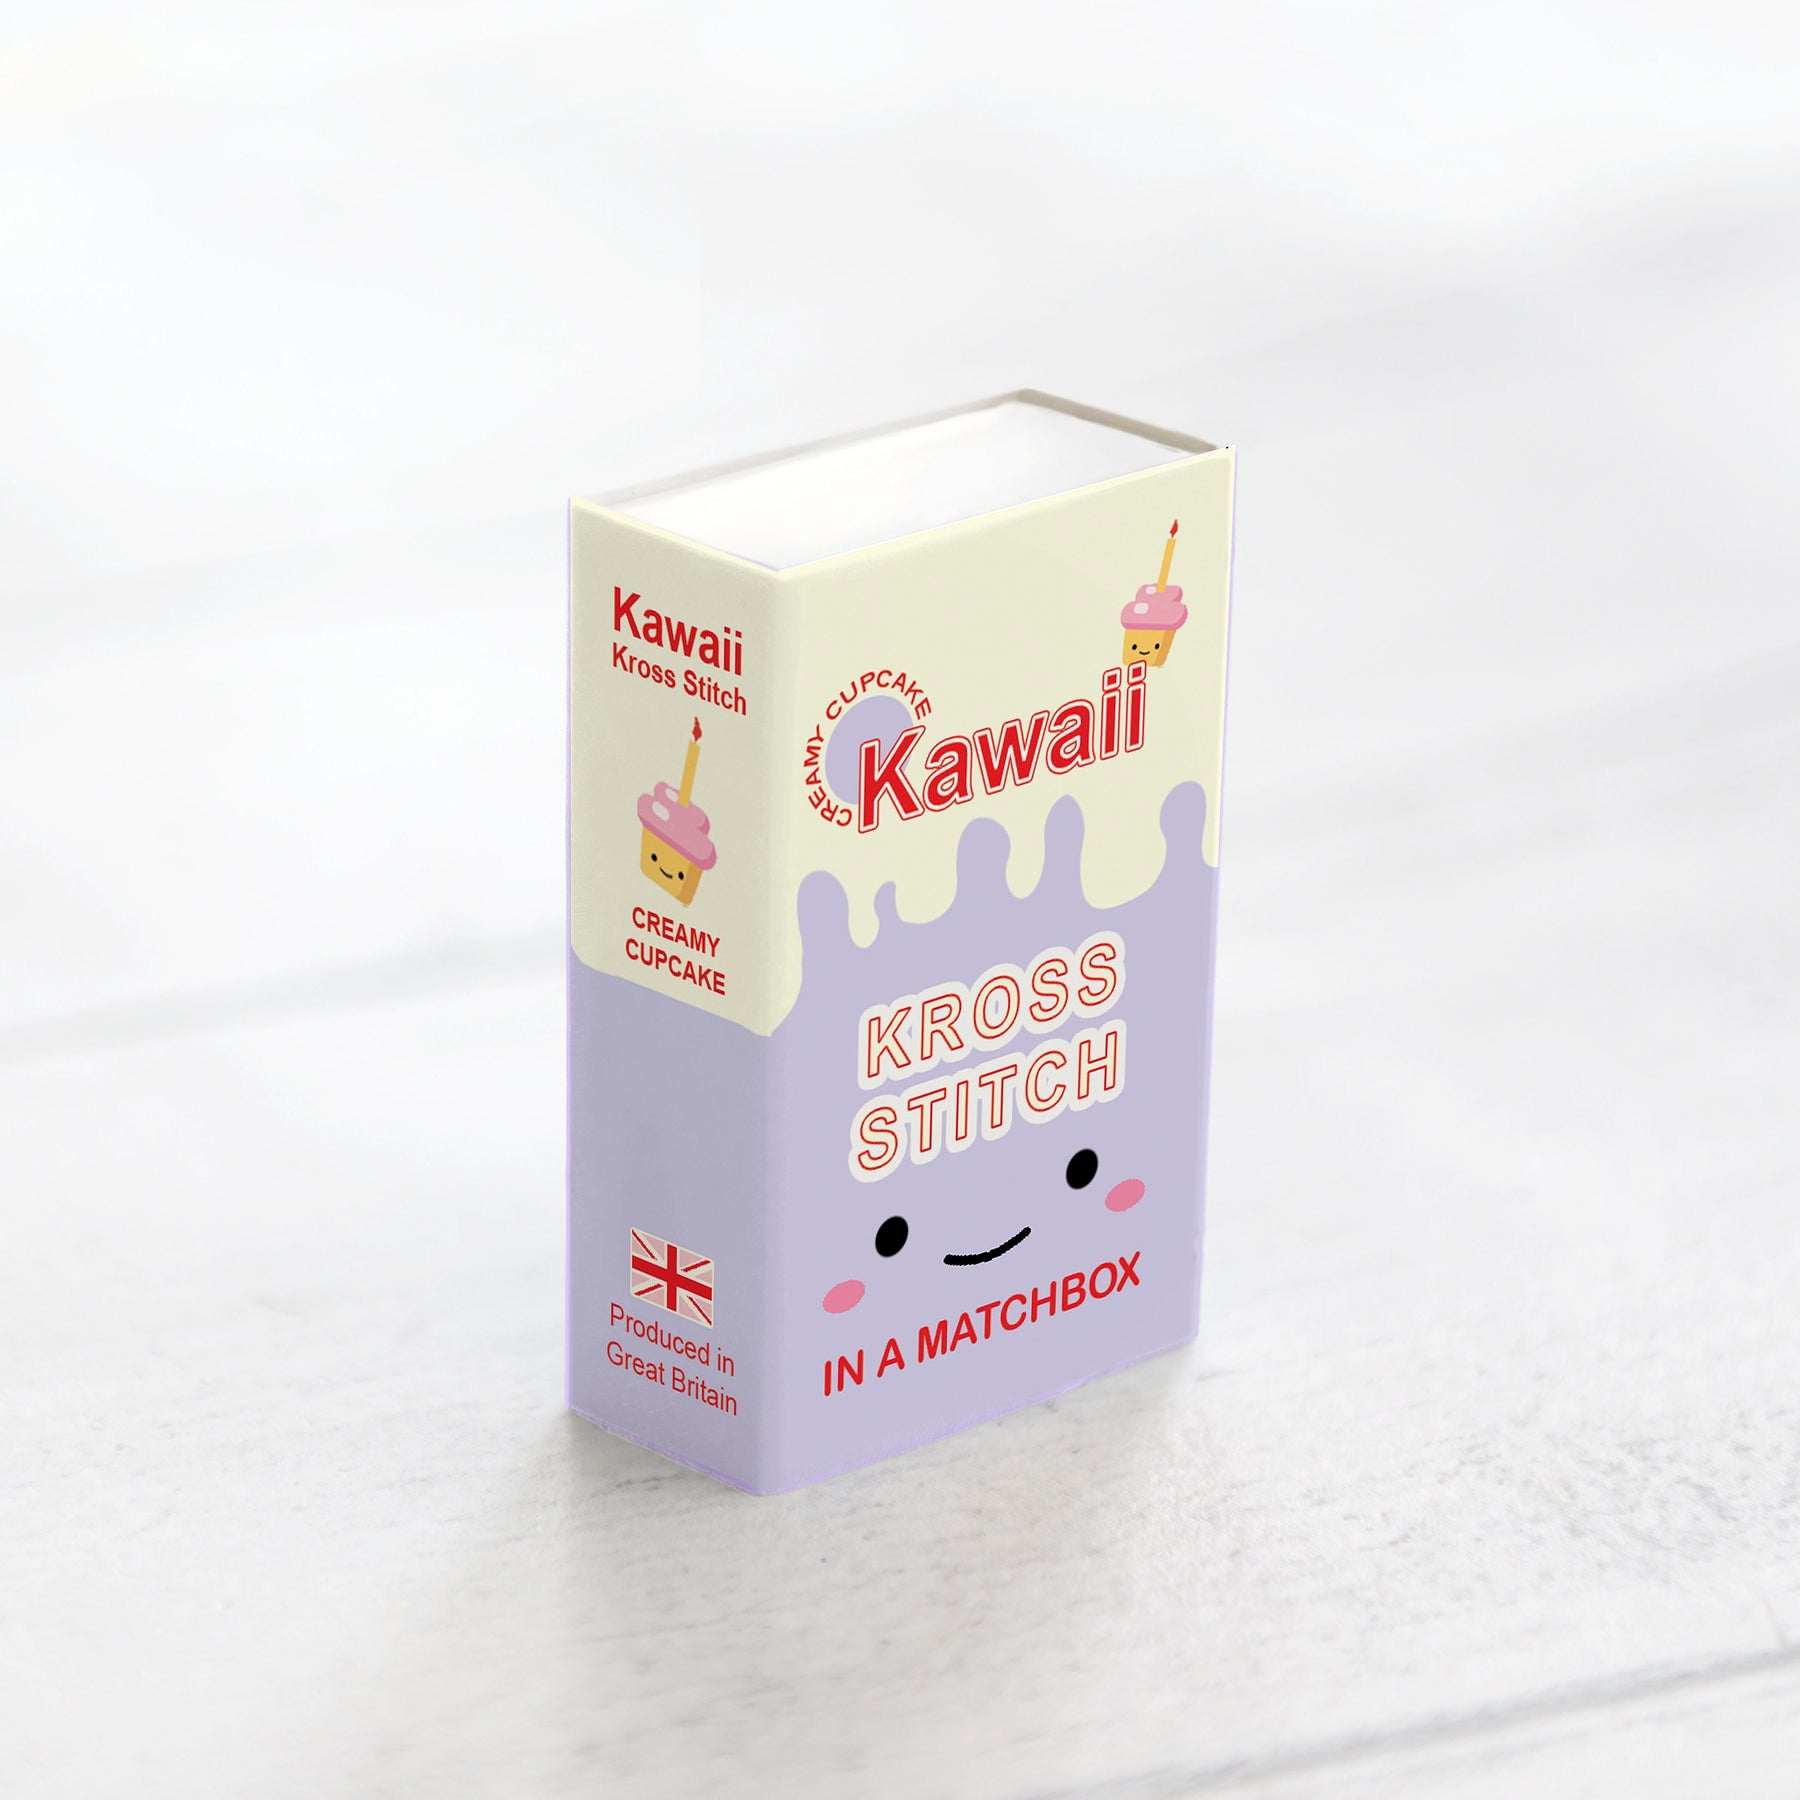 Mini Cross Stitch Kit With Kawaii Cup Cake Design